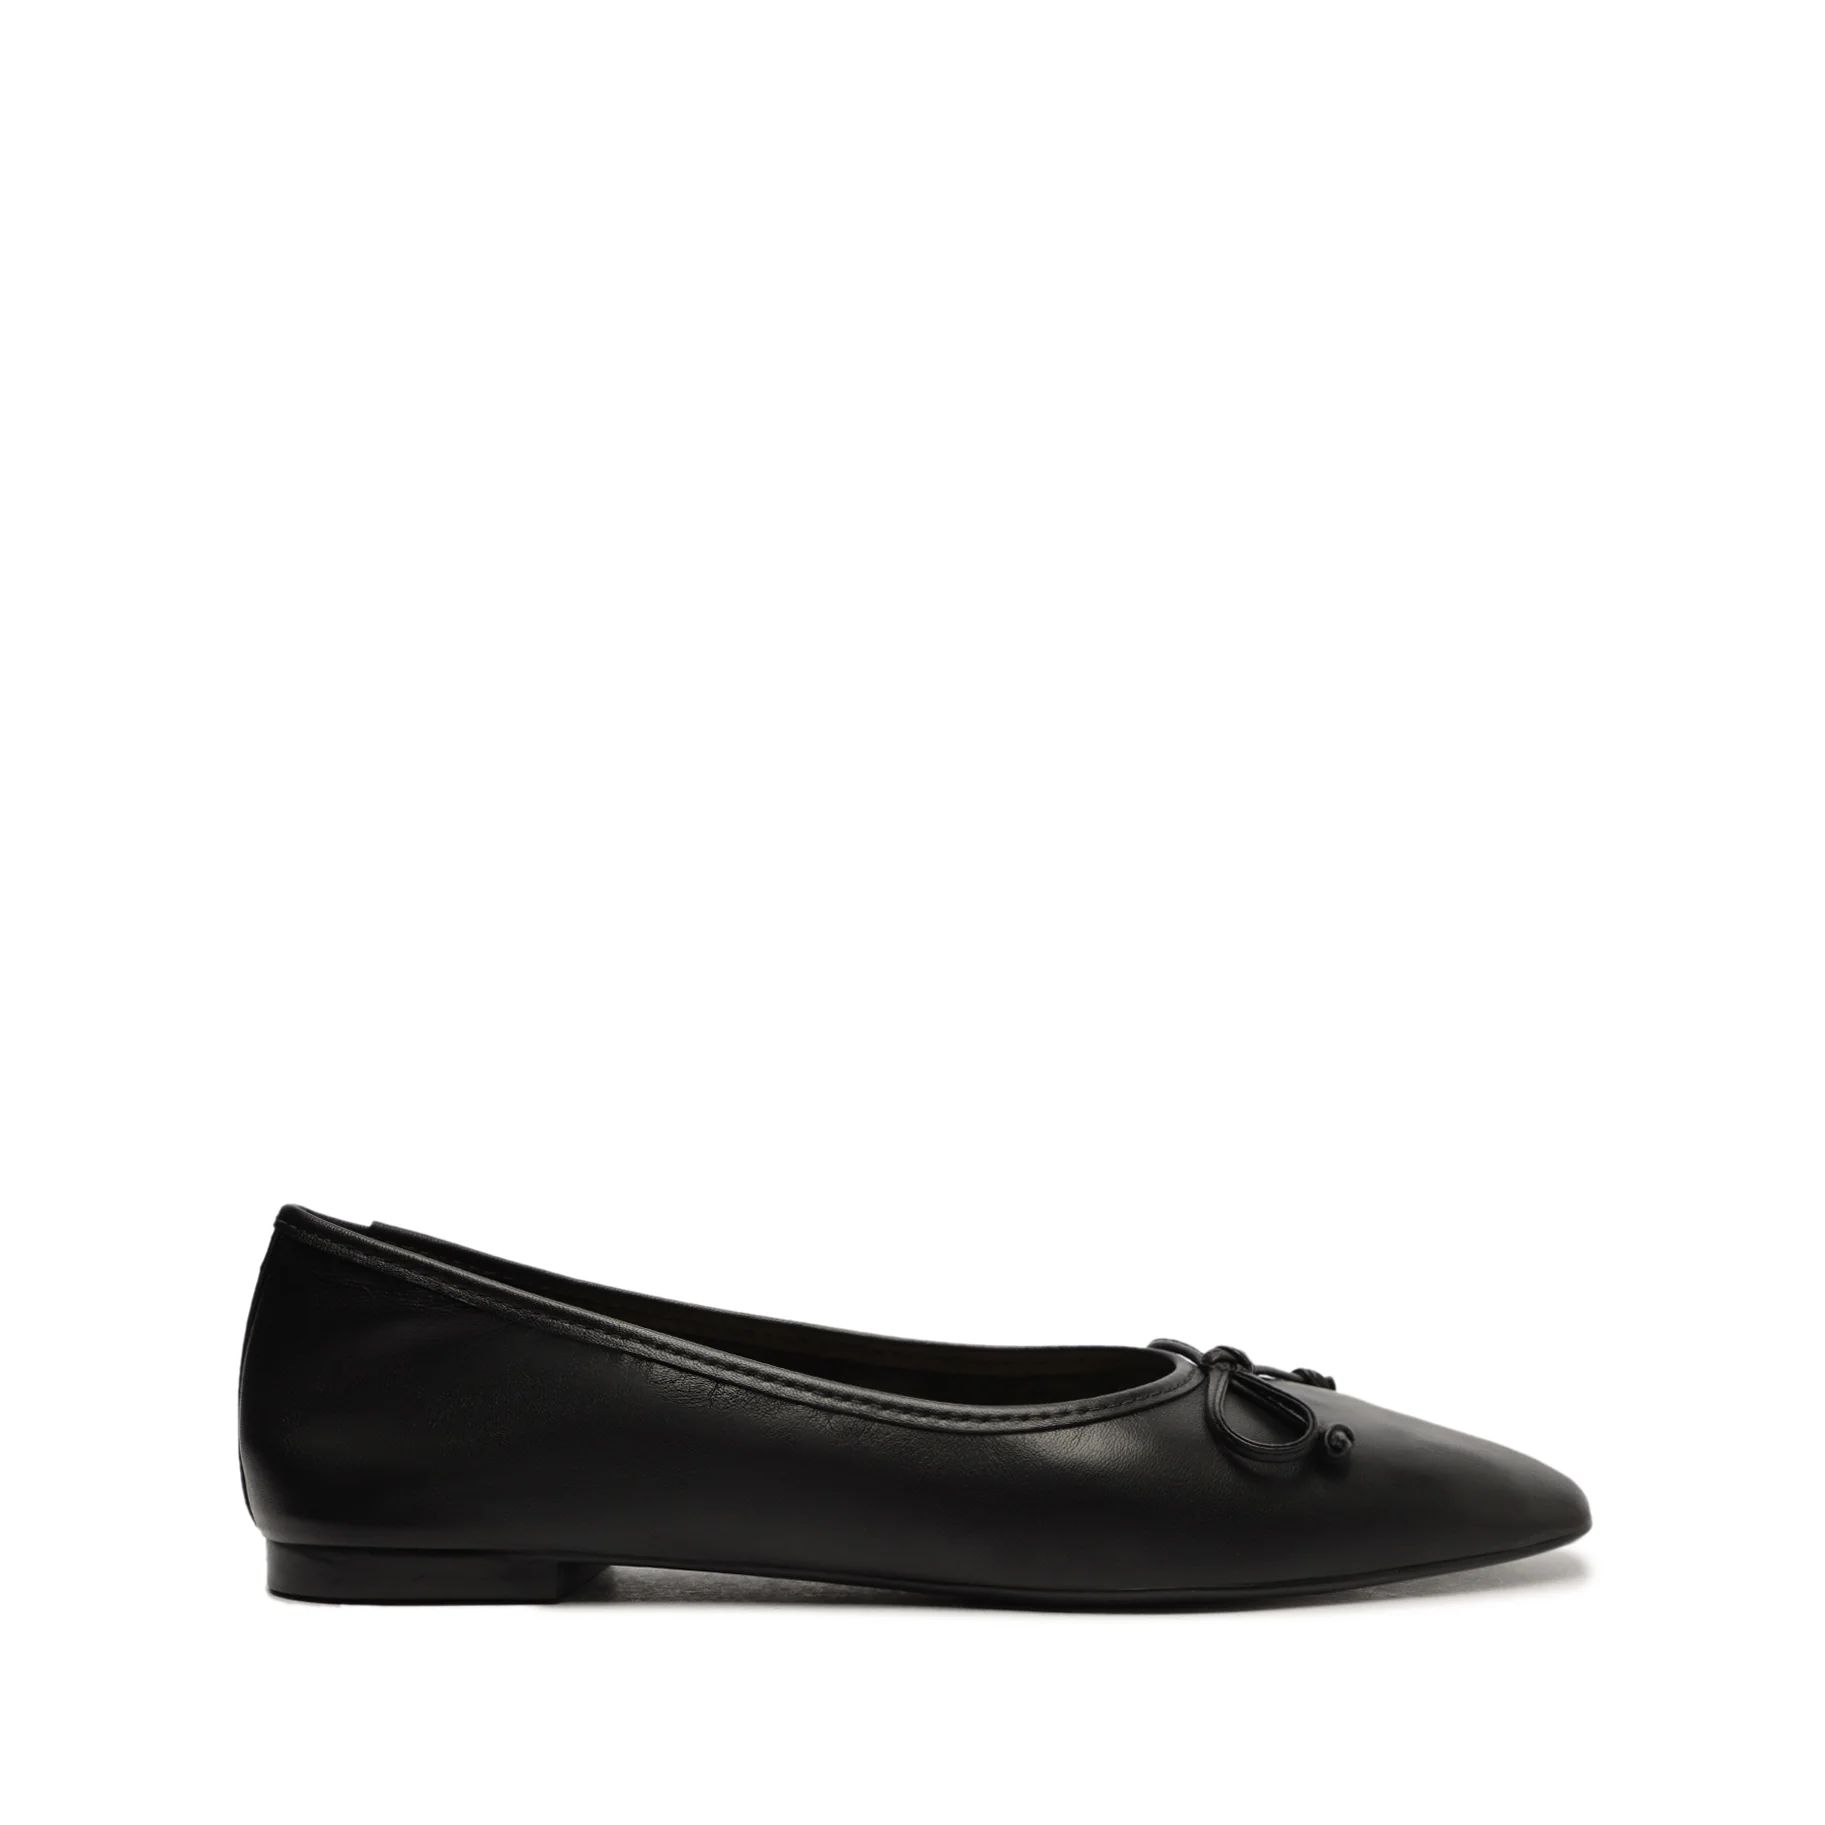 Arissa Nappa Leather Flat | Schutz Shoes (US)